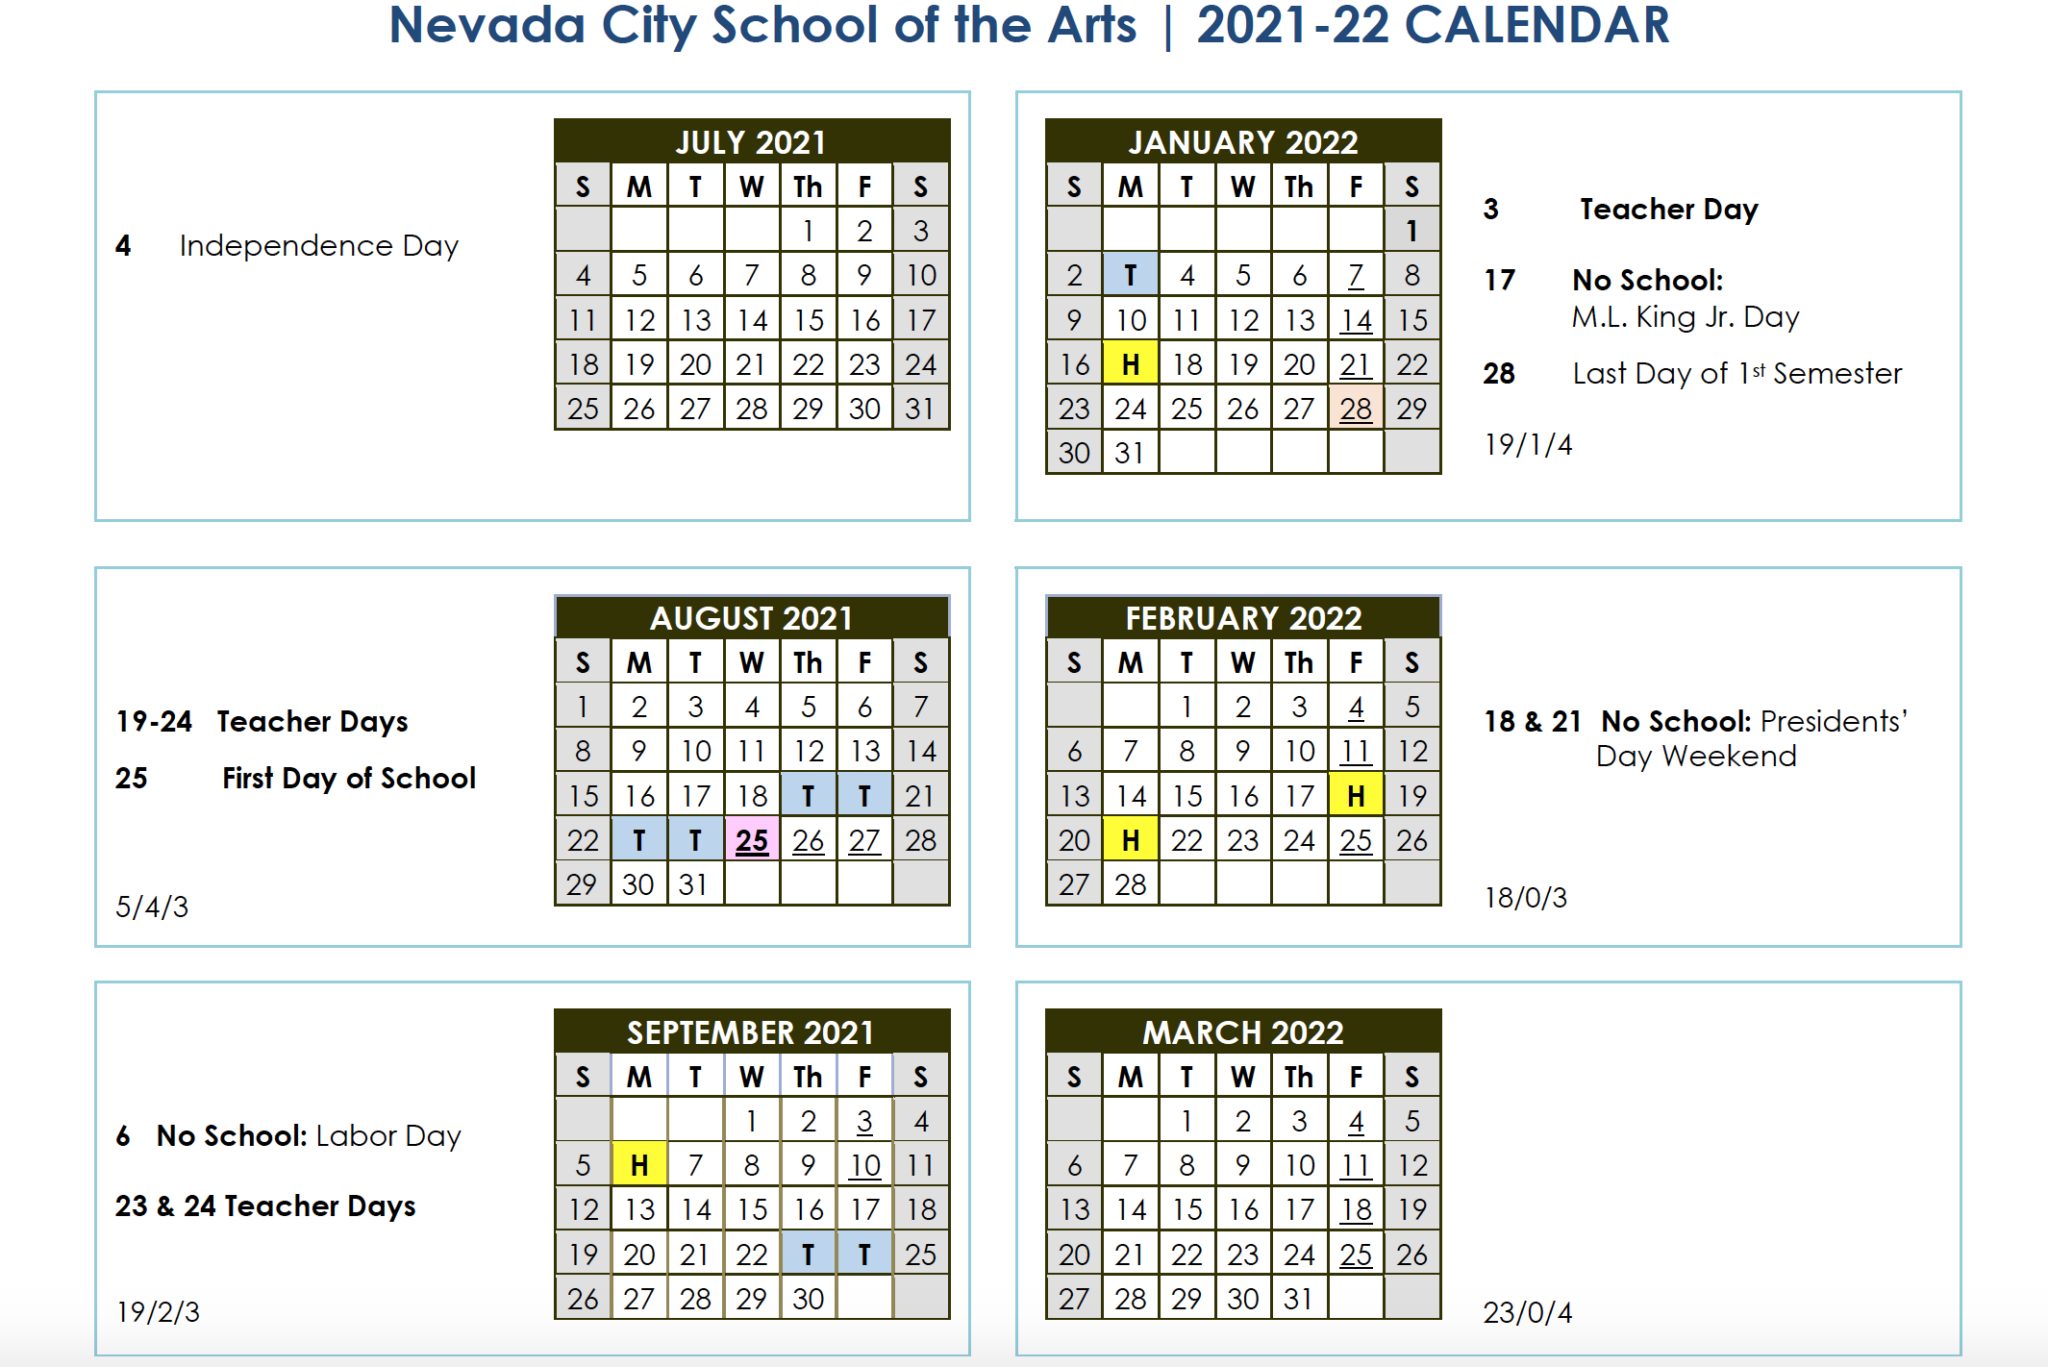 YearataGlanceCalendar Nevada City School of The Arts